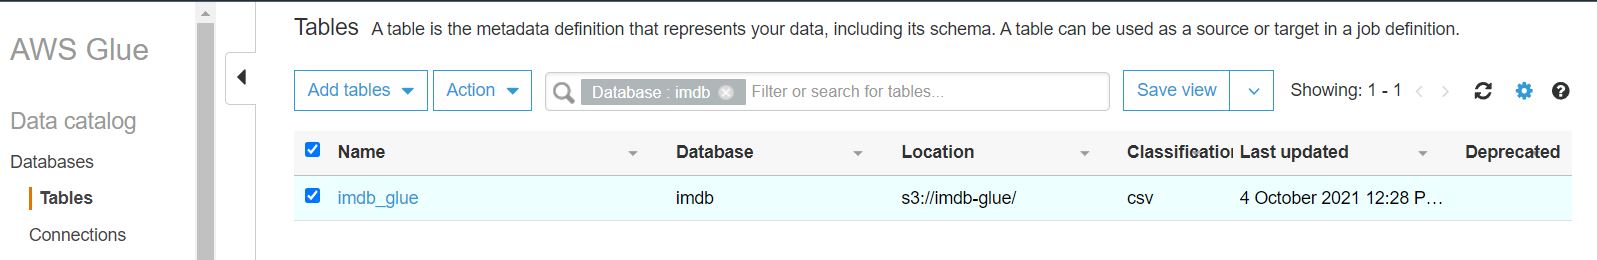 data catalog tables